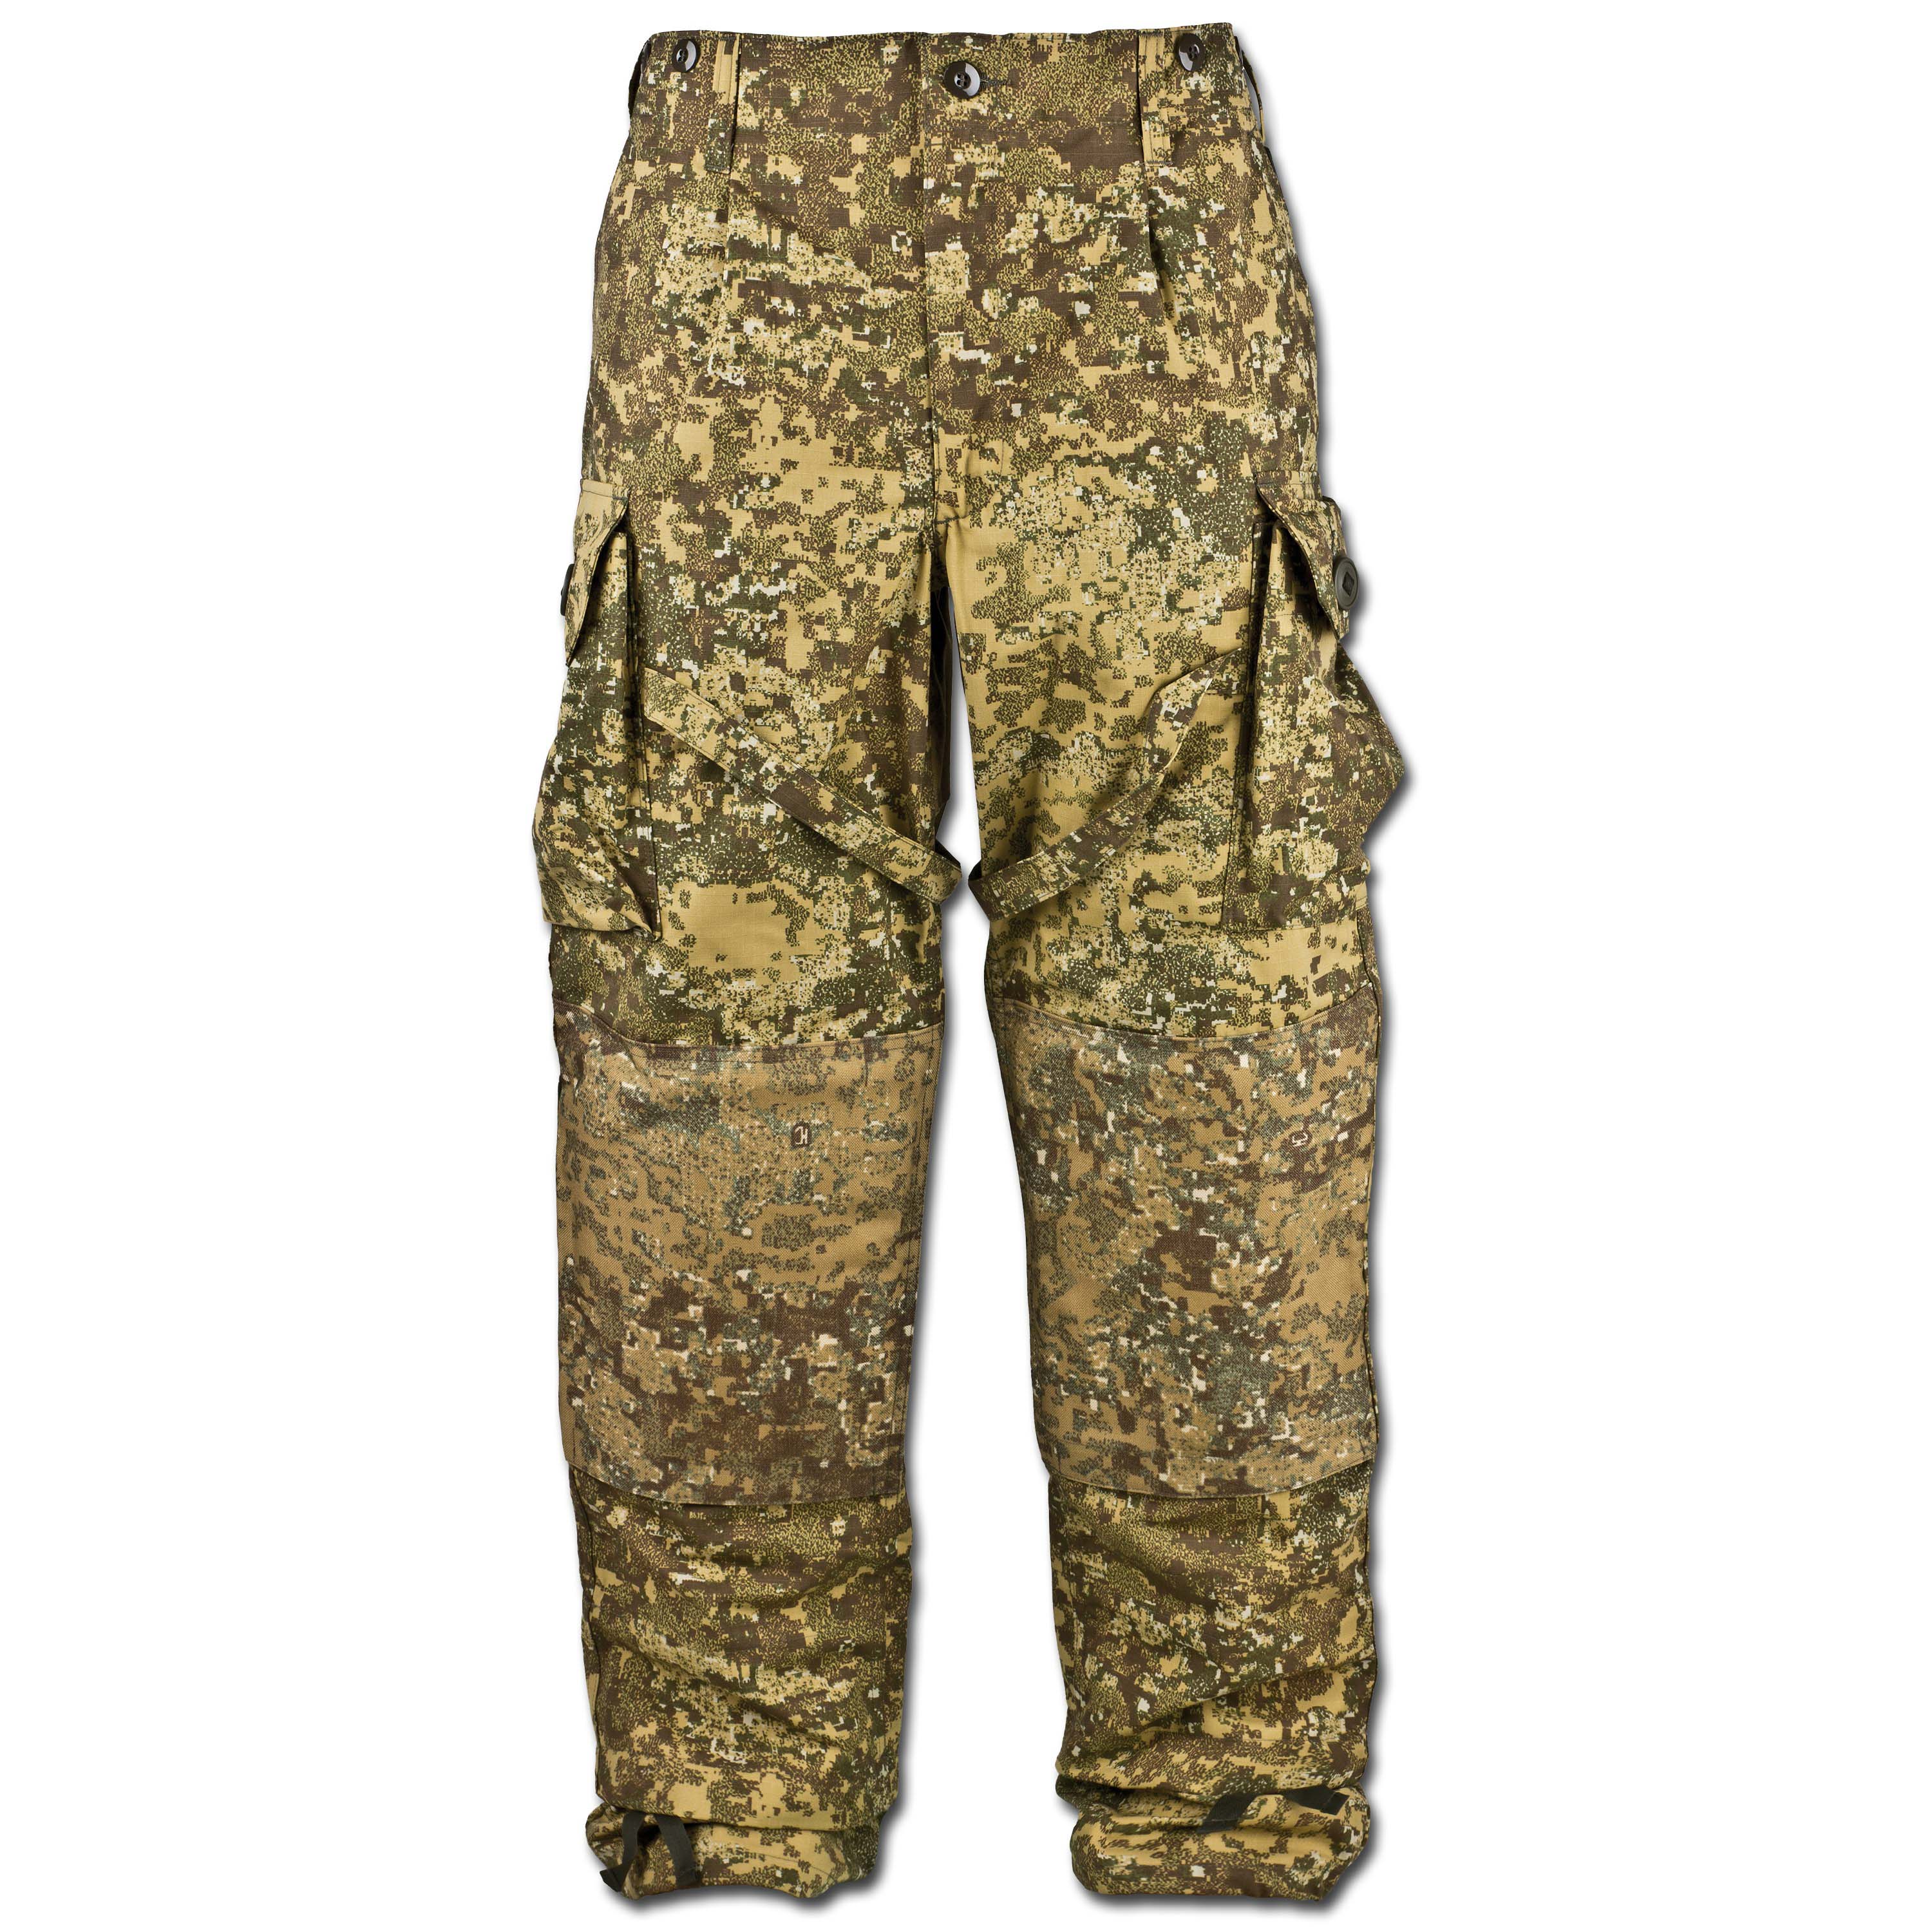 Purchase the KSK Combat Pants PenCott BadLands by ASMC